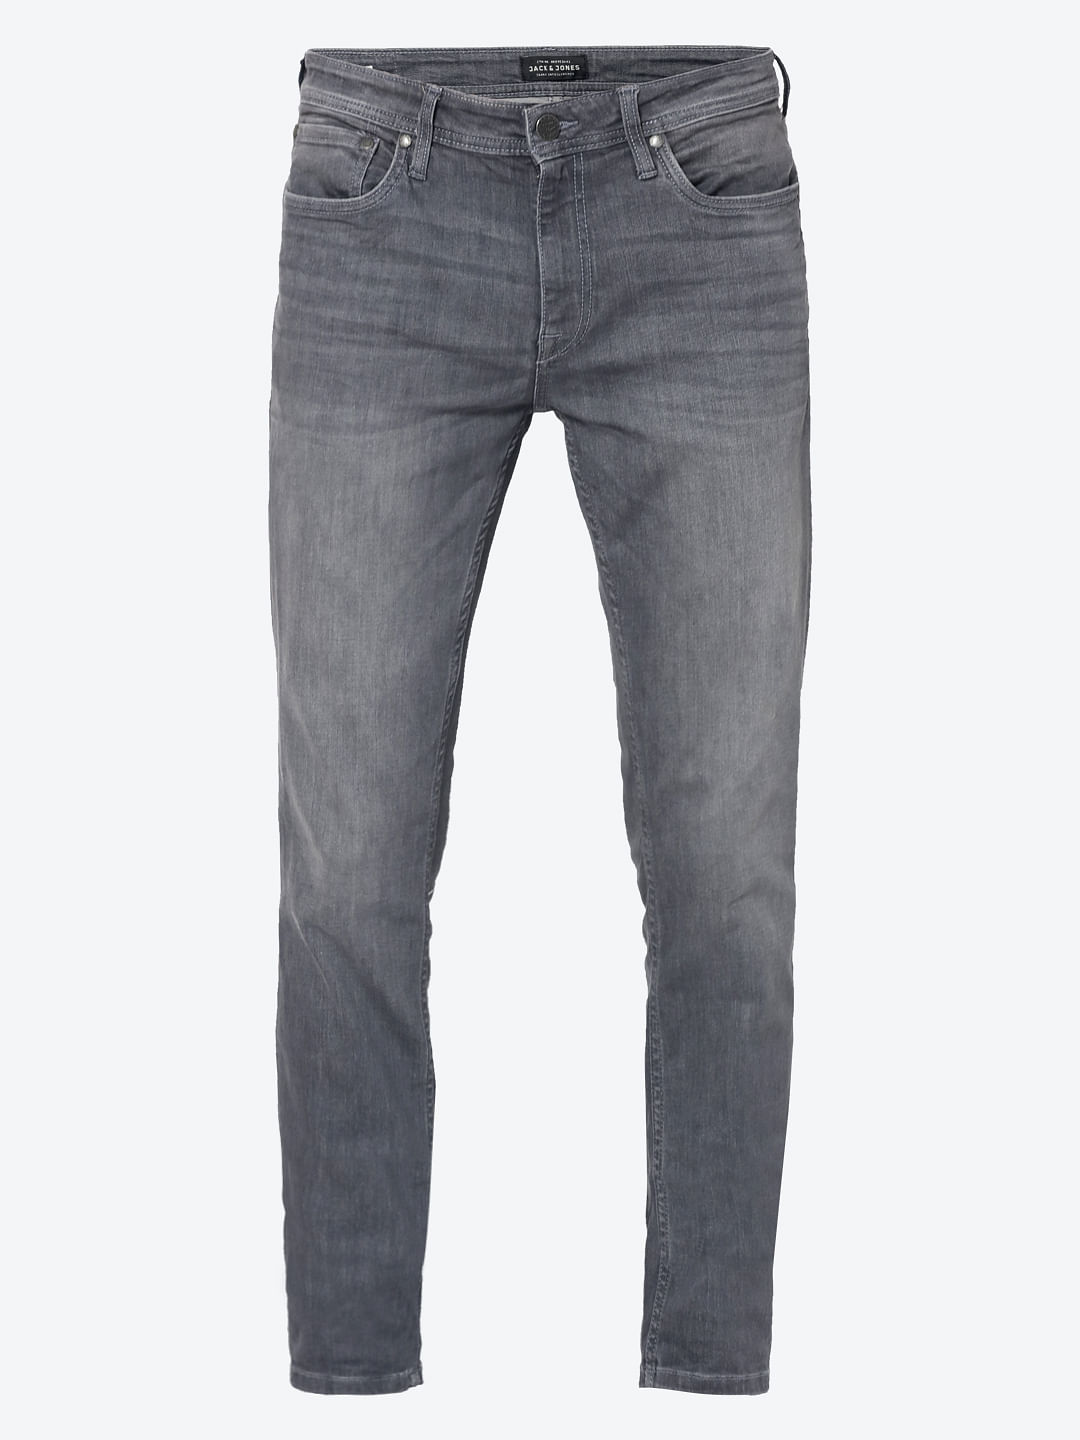 skinny fit grey jeans